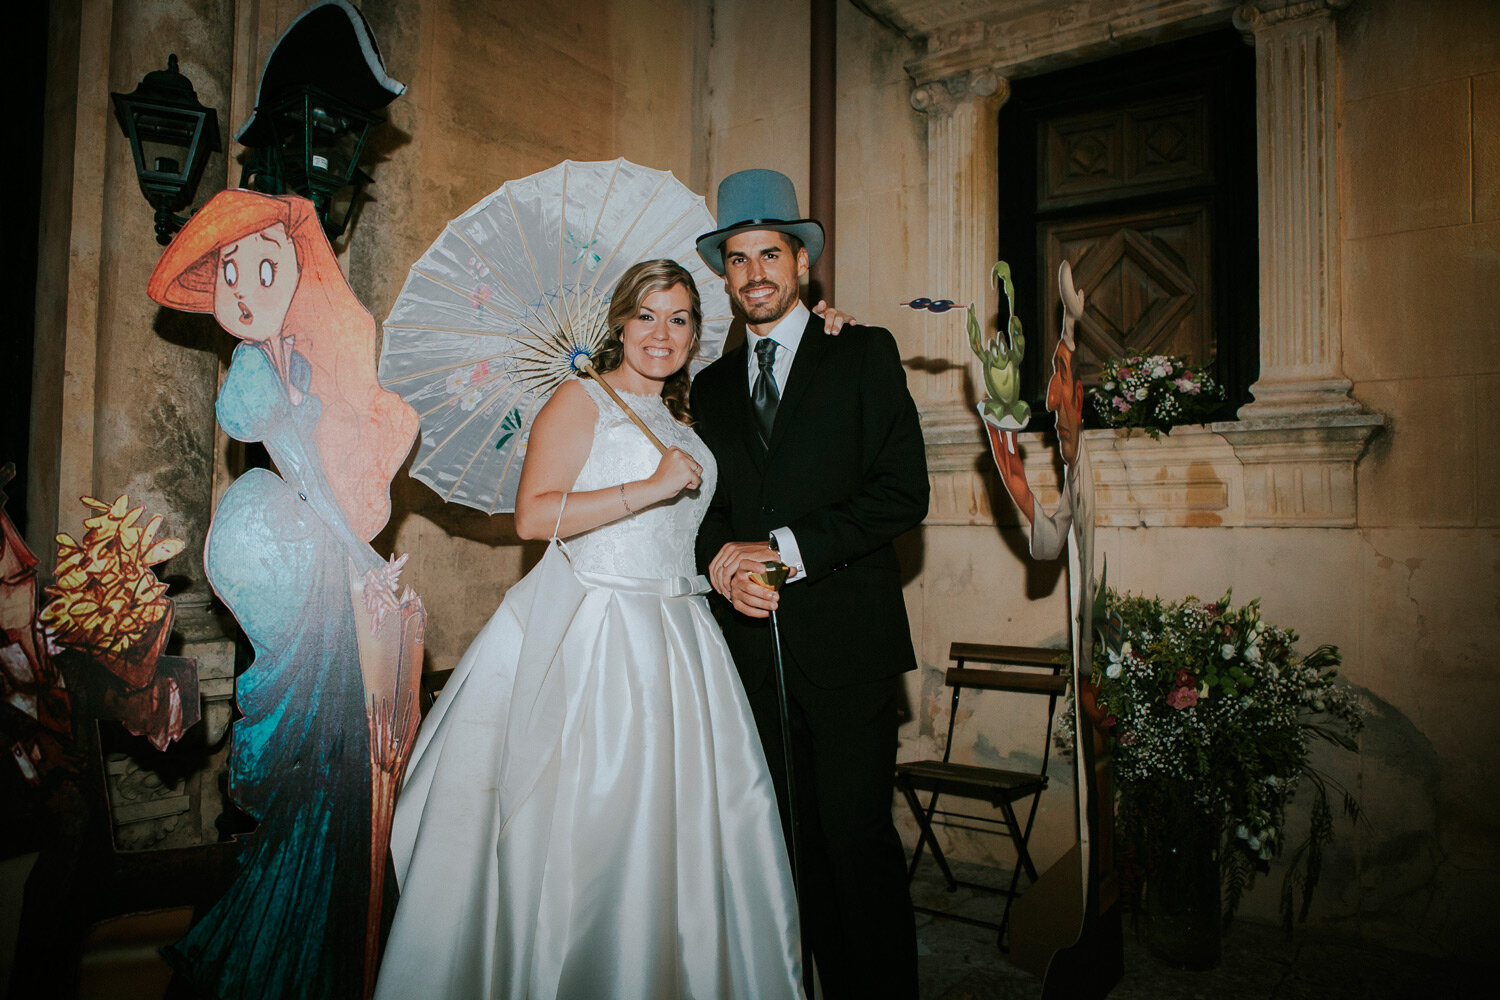 145-vilayvidal-fotografia-bodas-gandia-valencia-alicante-boda-Sandra-Beltran-Finca-Torrefiel-Valencia.jpg